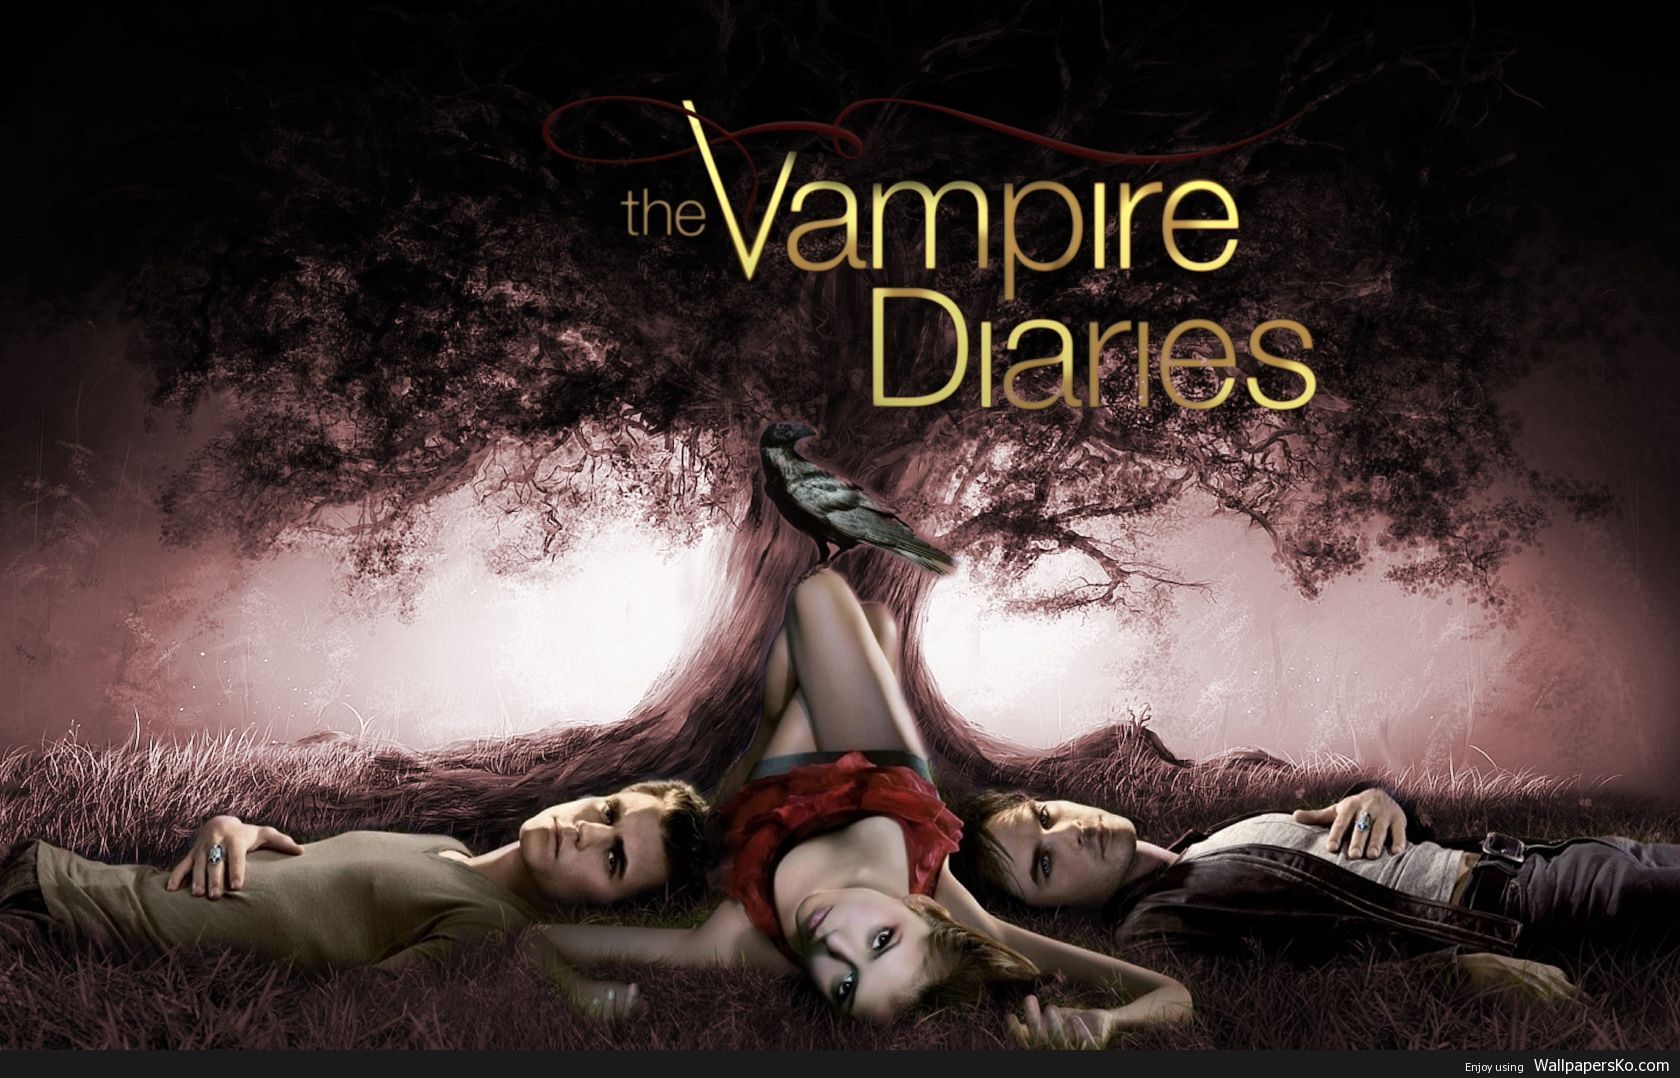 The Vampire Diaries Logo Wallpaper /the Vampire Diaries Logo Wallpa. The Vampire Diaries Logo, Vampire Diaries Wallpaper, Vampire Diaries